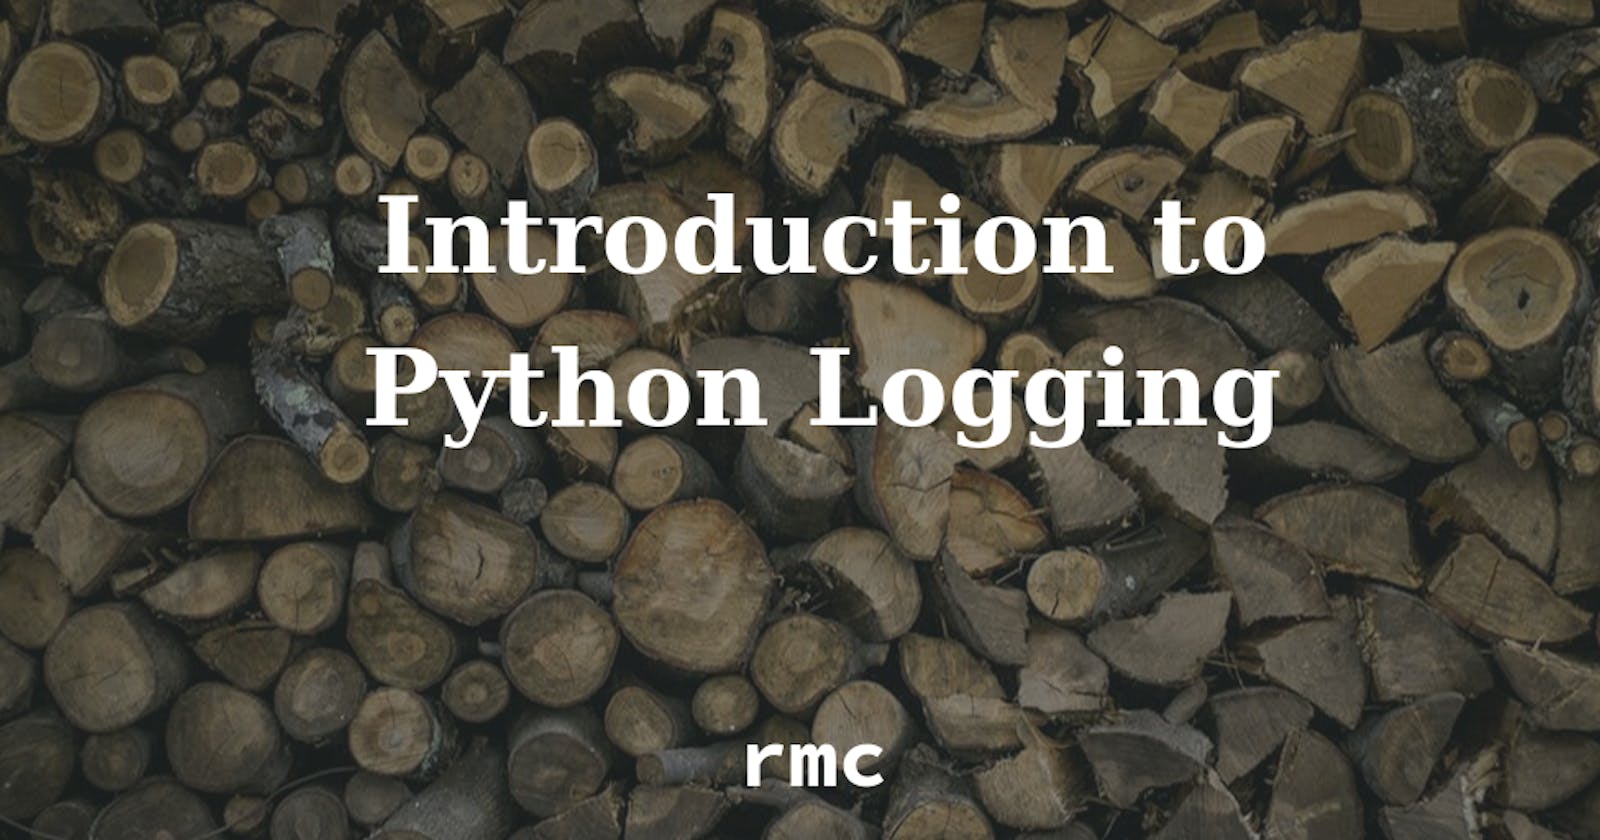 Introduction to Python Logging